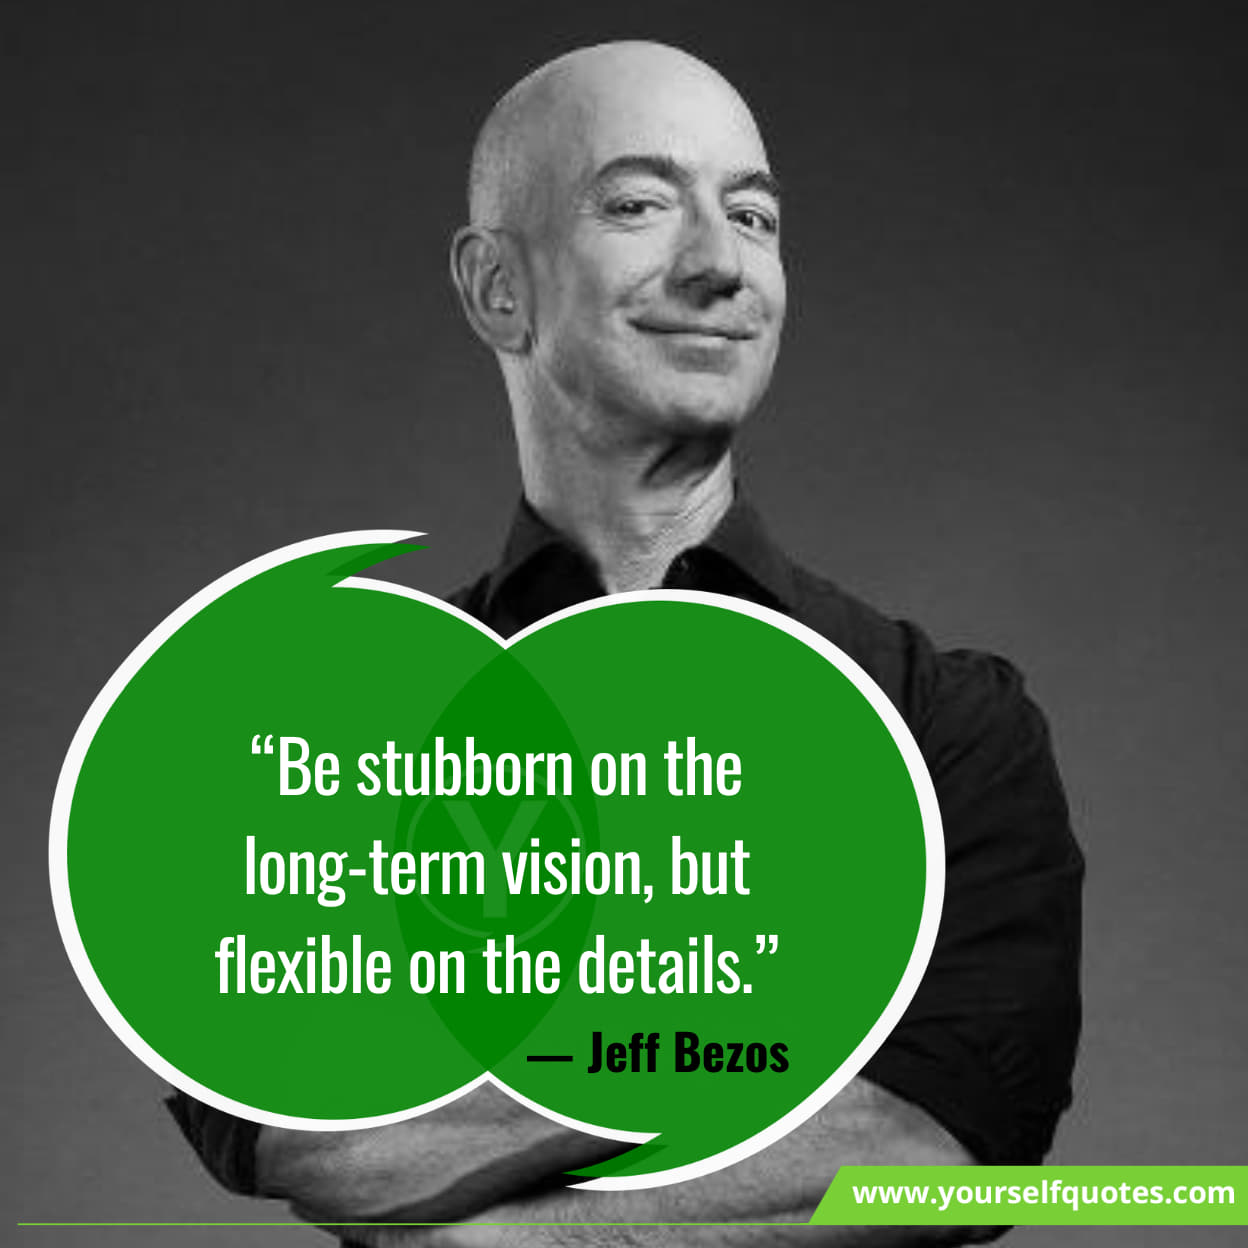 Best Jeff Bezos Quotes For Life